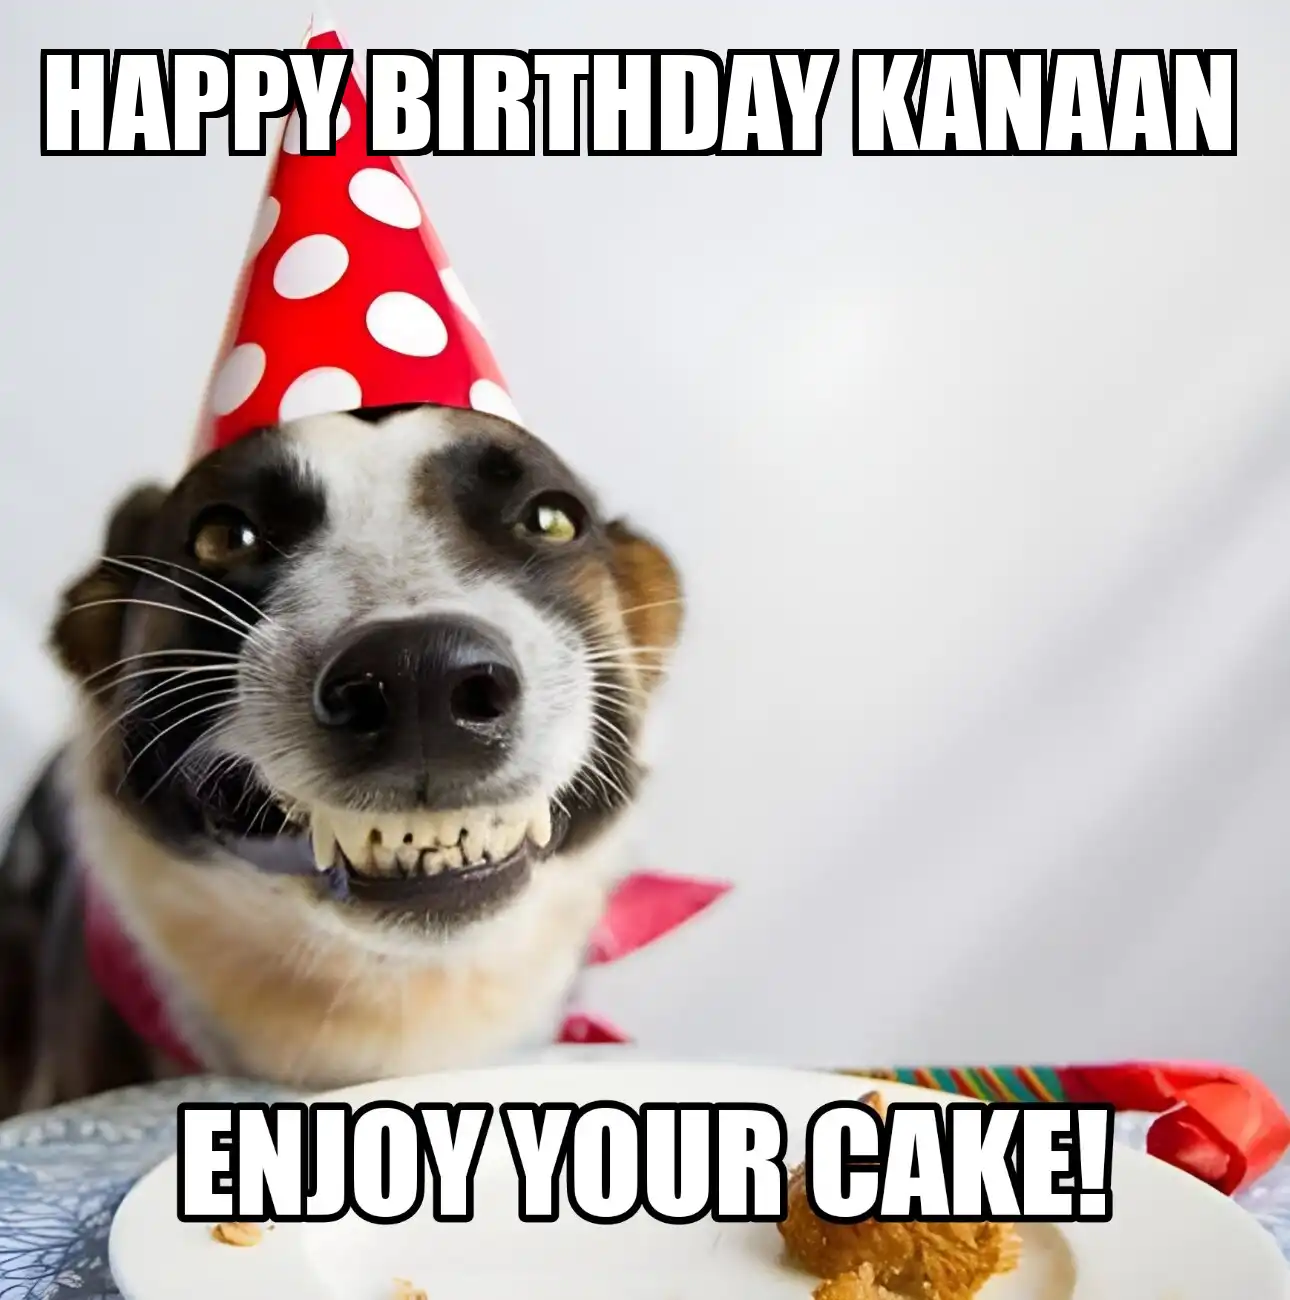 Happy Birthday Kanaan Enjoy Your Cake Dog Meme